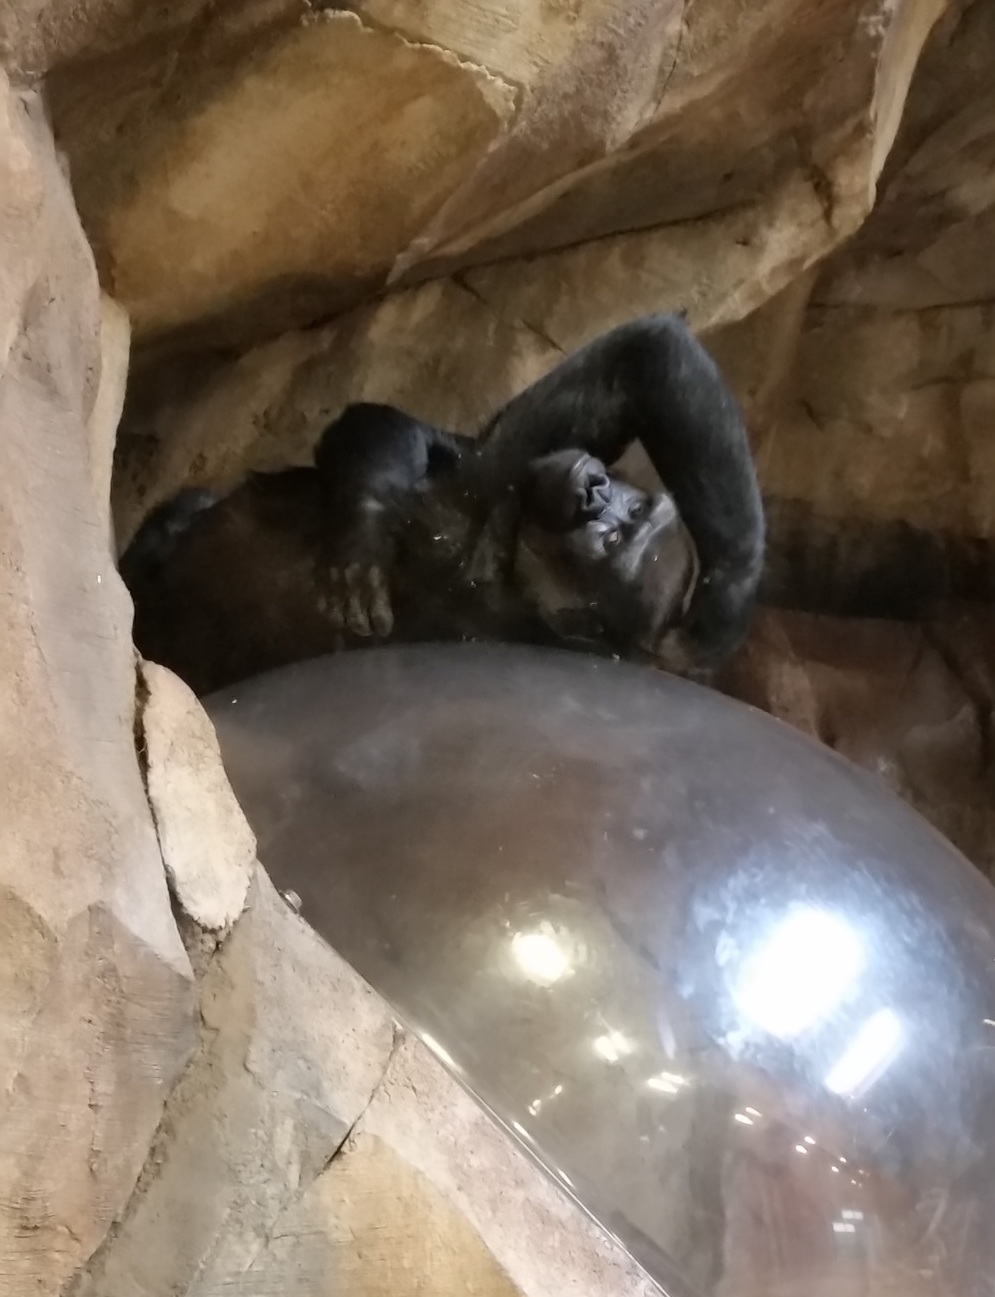 Gorilla lounging